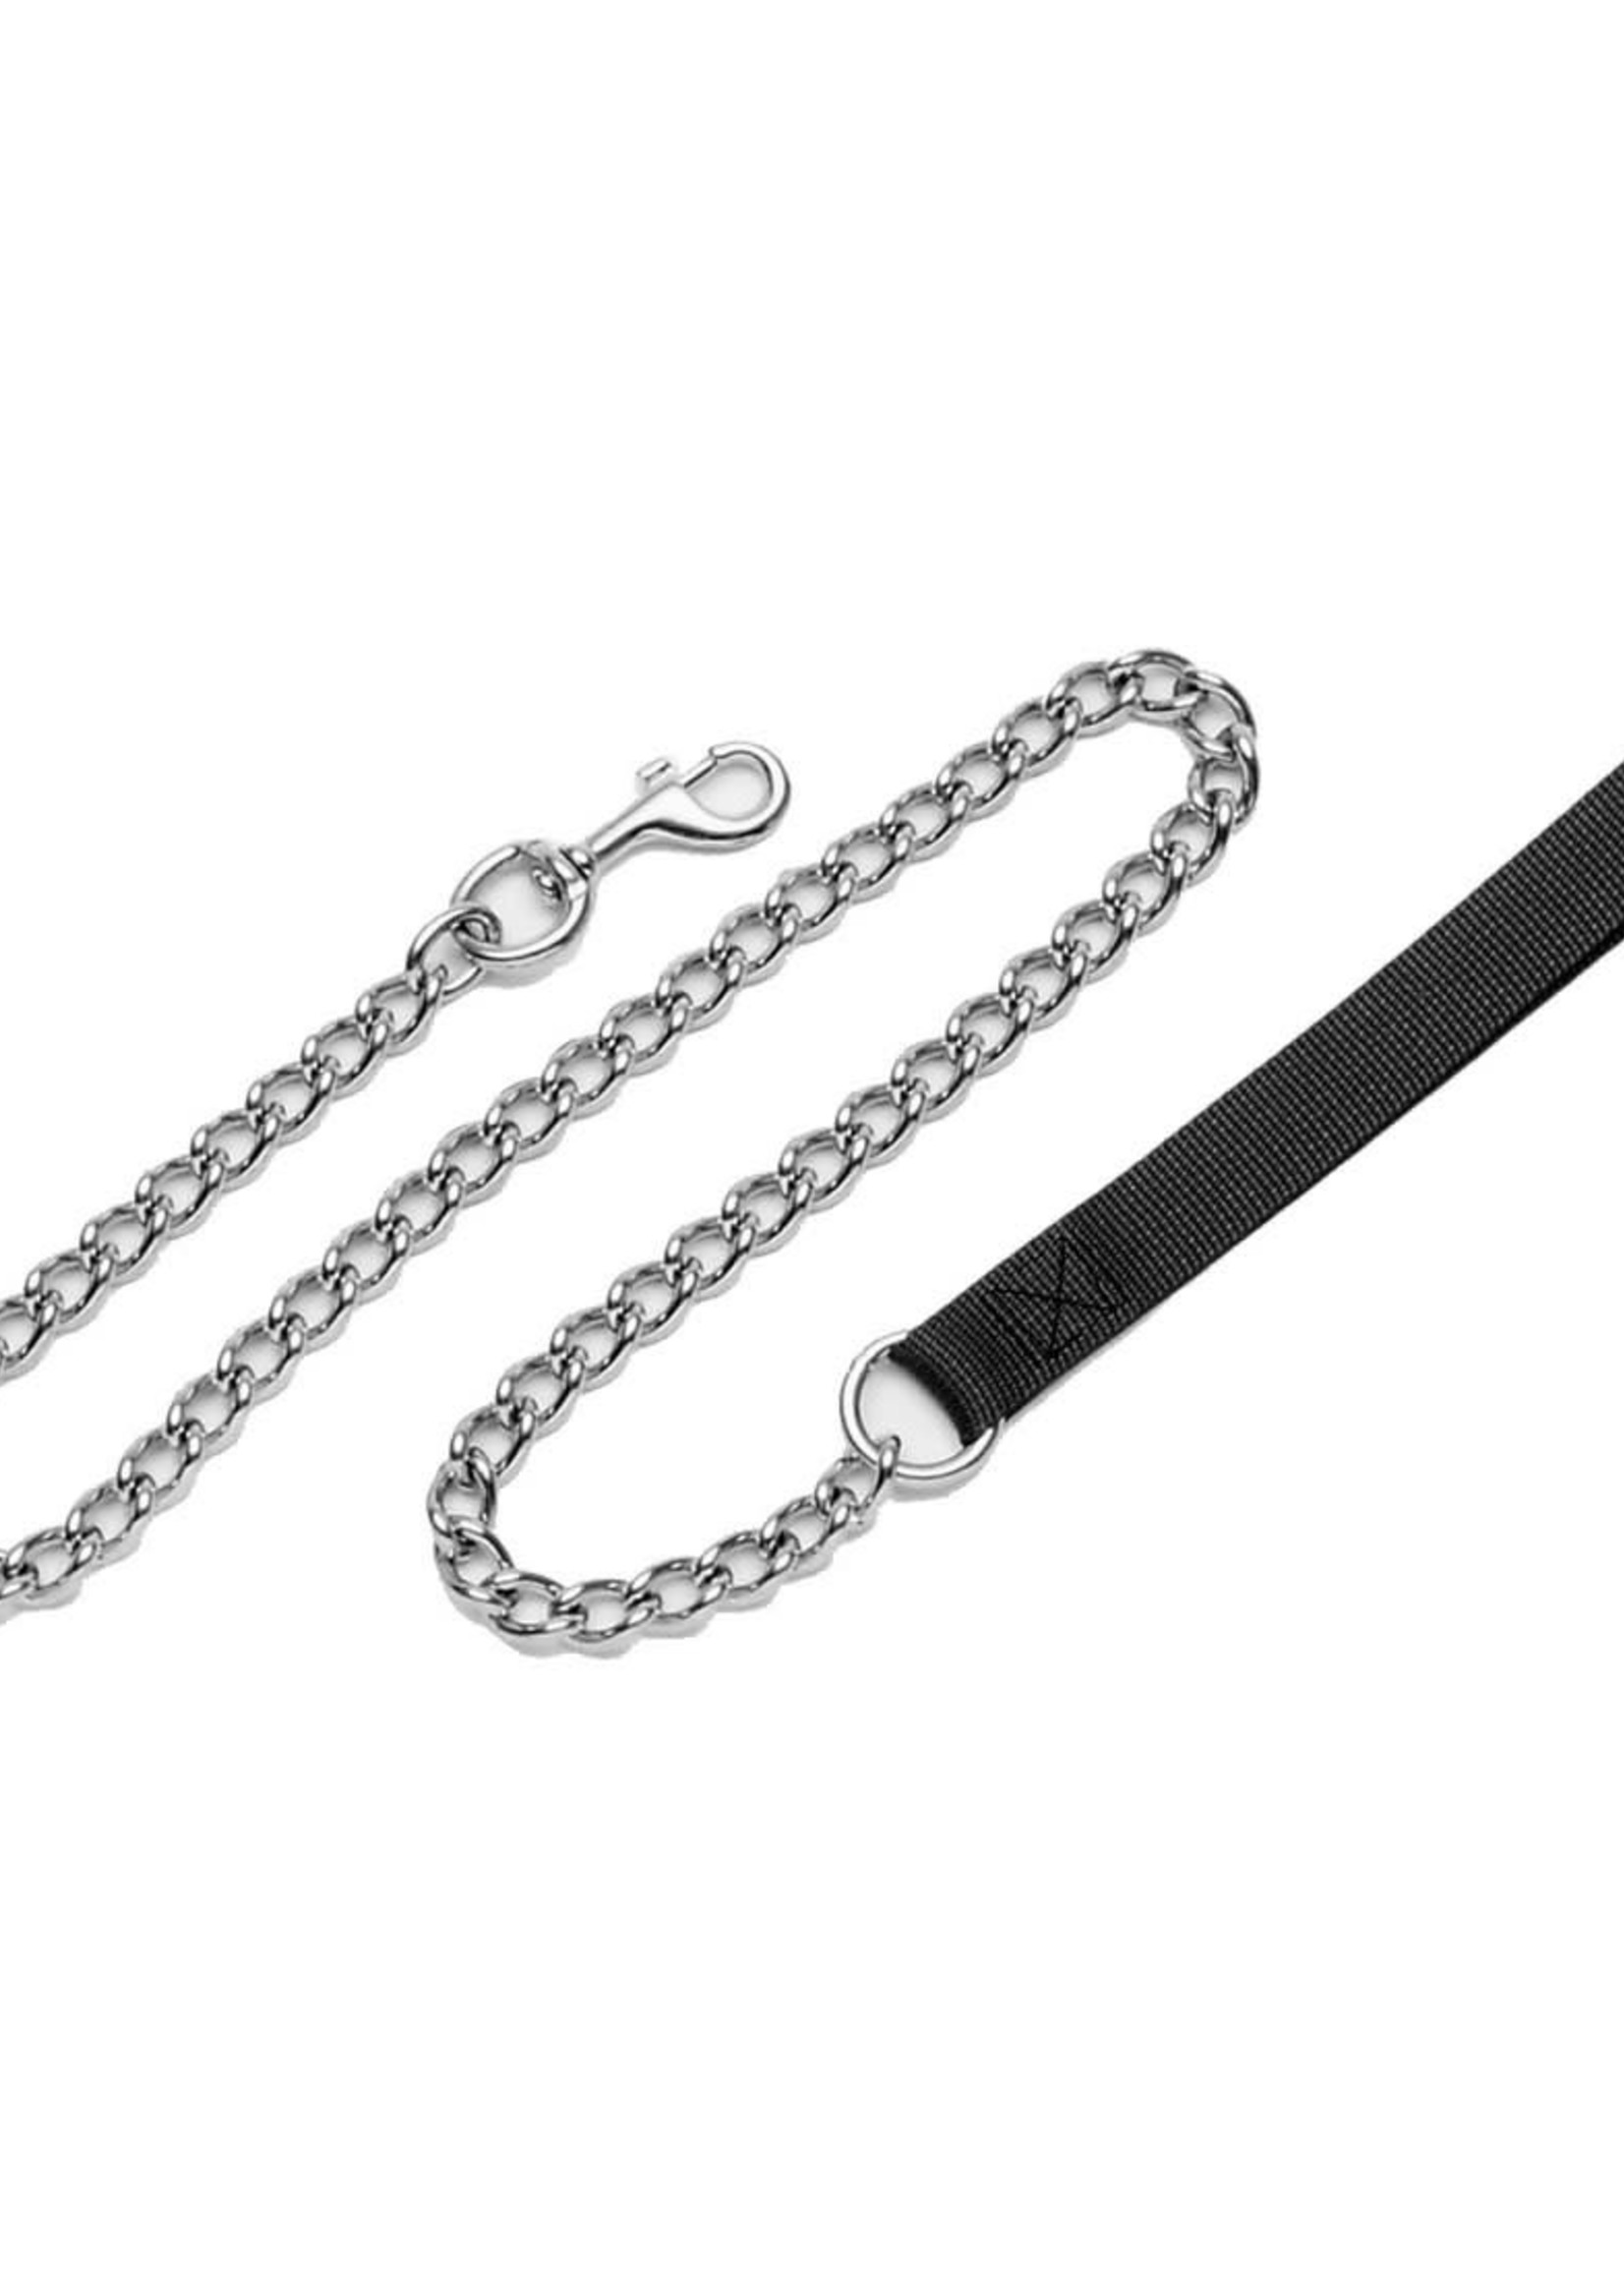 Titan® Titan Heavy Chain Leash with Nylon Handle 4' x 3mm Black